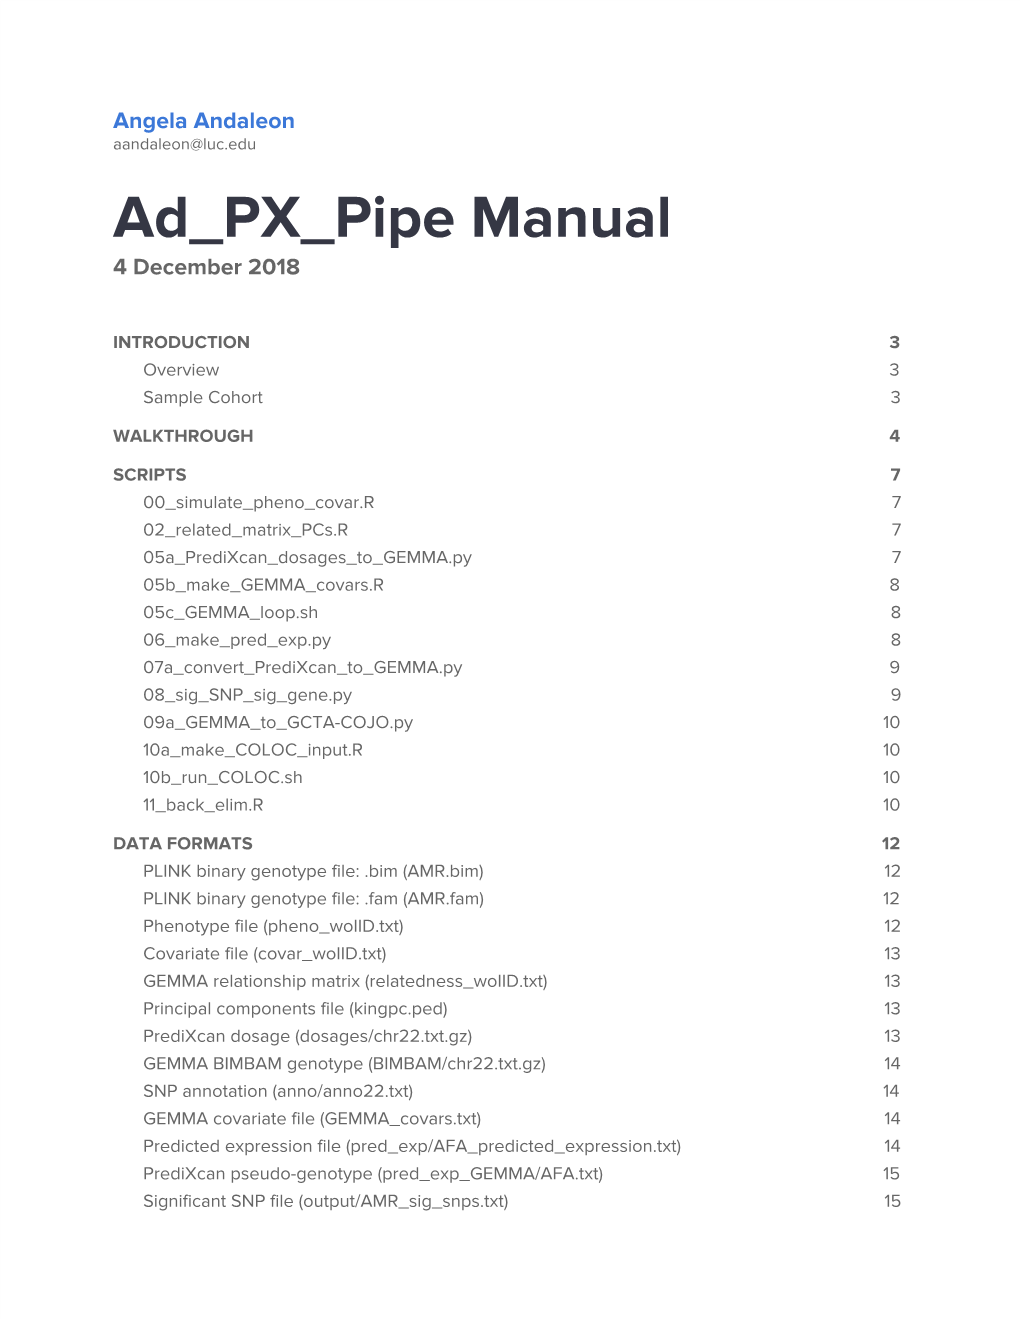 Ad PX Pipe Manual 4 December 2018